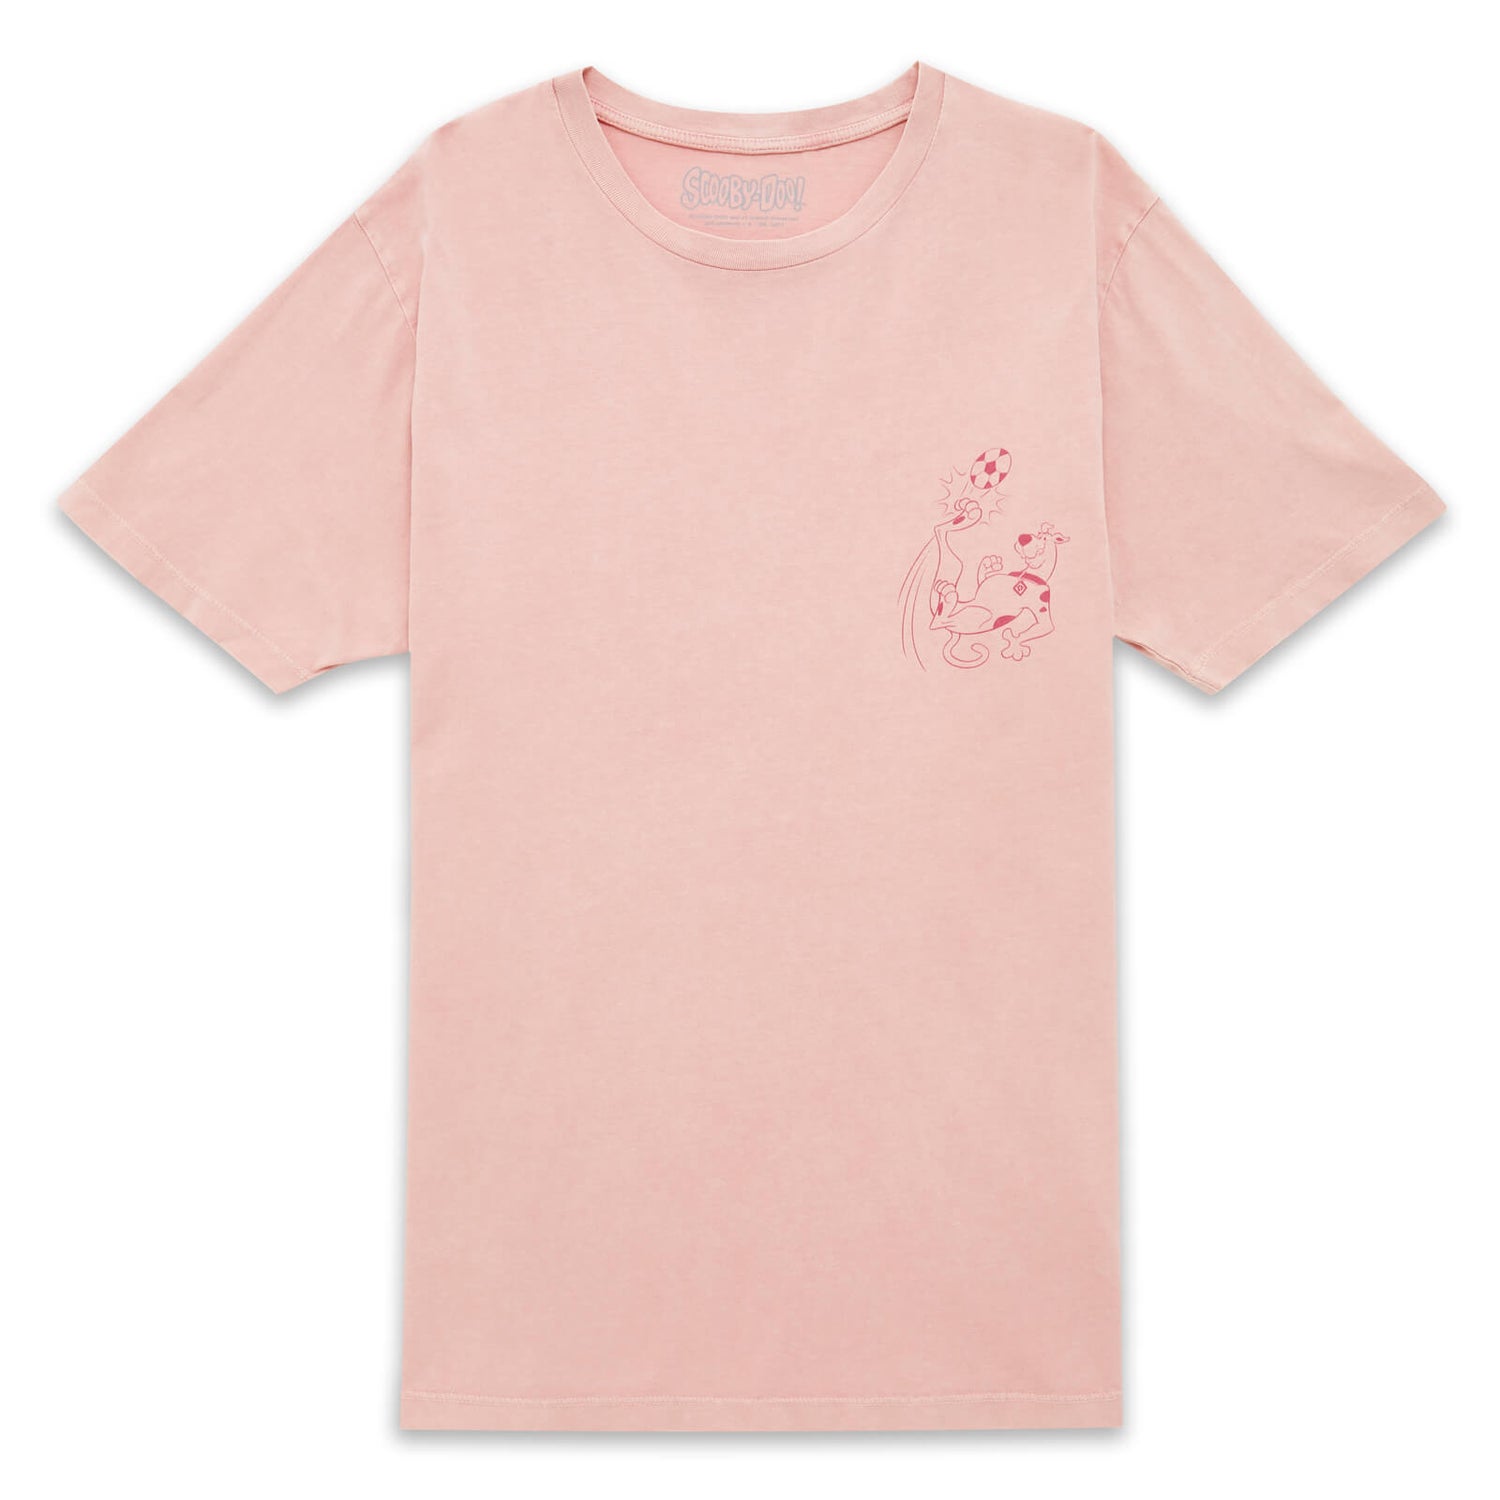 Camiseta unisex Scooby Doo Soccer Scooby - Pink Acid Wash